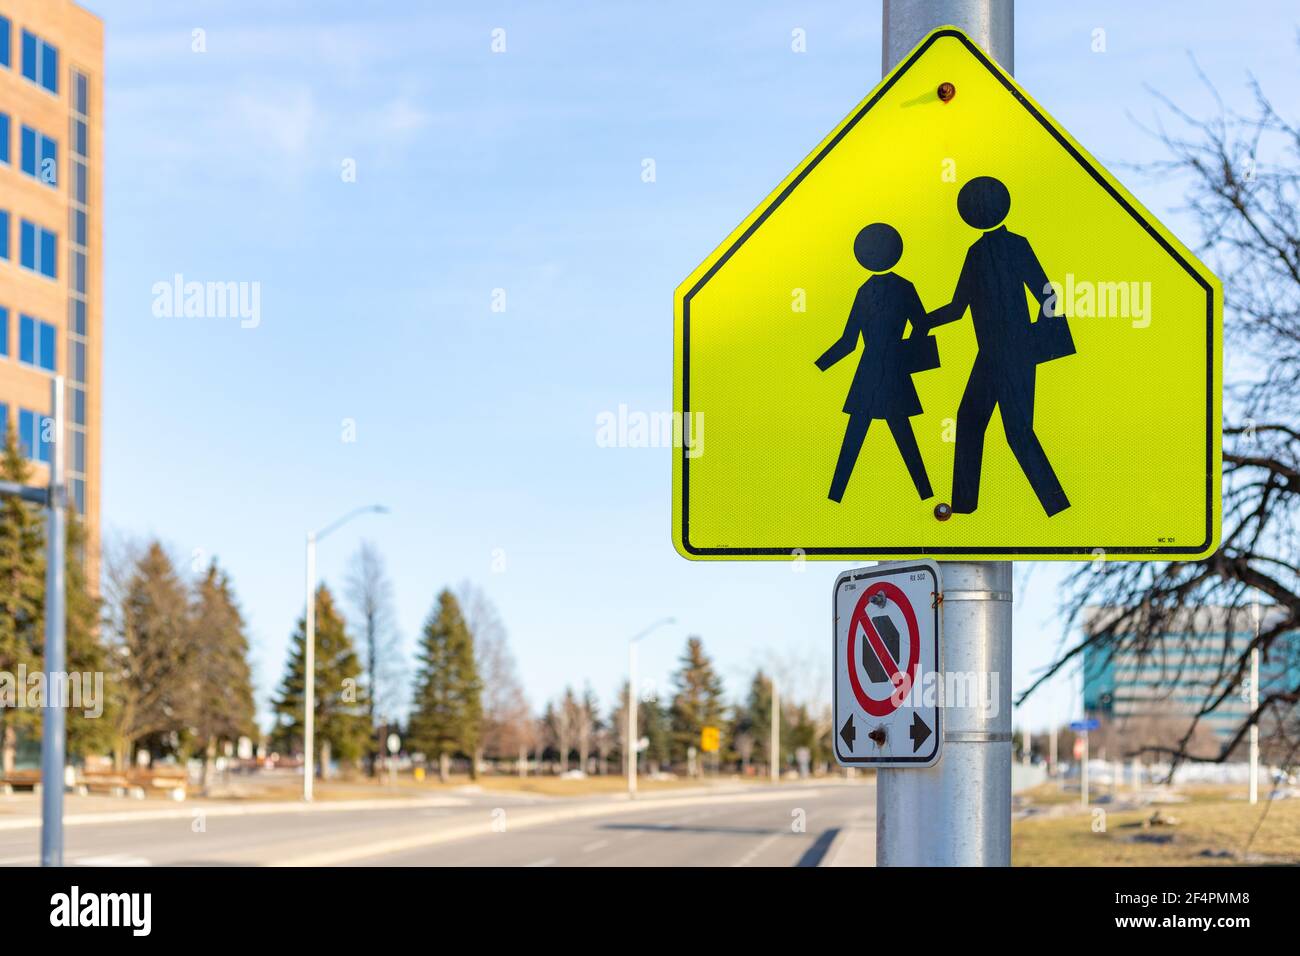 Ottawa, Canada - March 19, 2021: School Ahead sign on the road in Ottawa, Canada Stock Photo